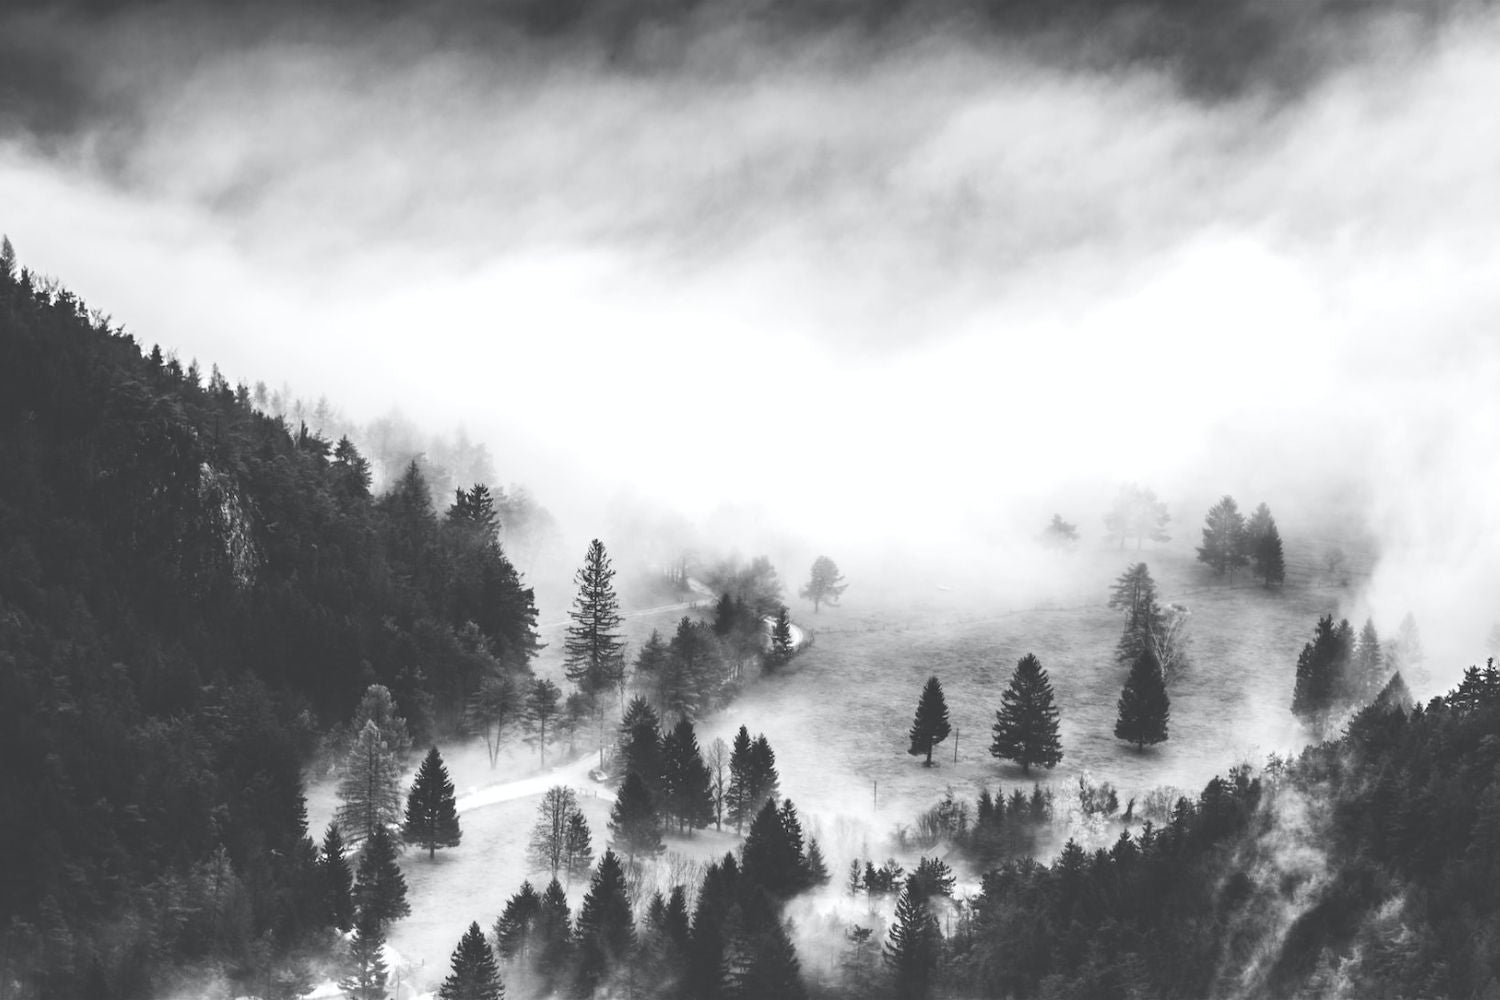 black and white landscape photo